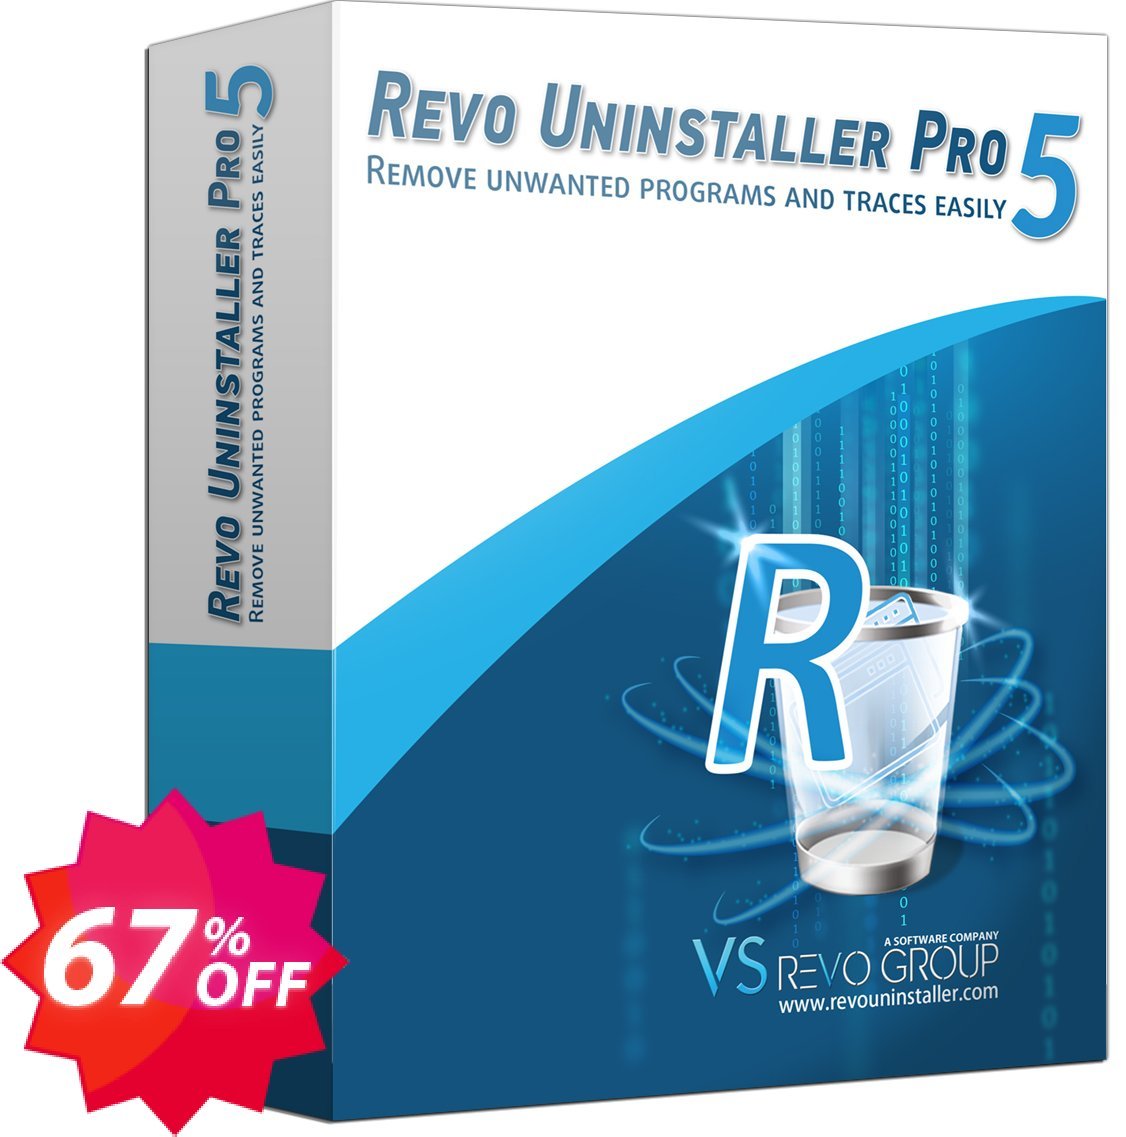 Revo Uninstaller PRO 5 Coupon code 67% discount 